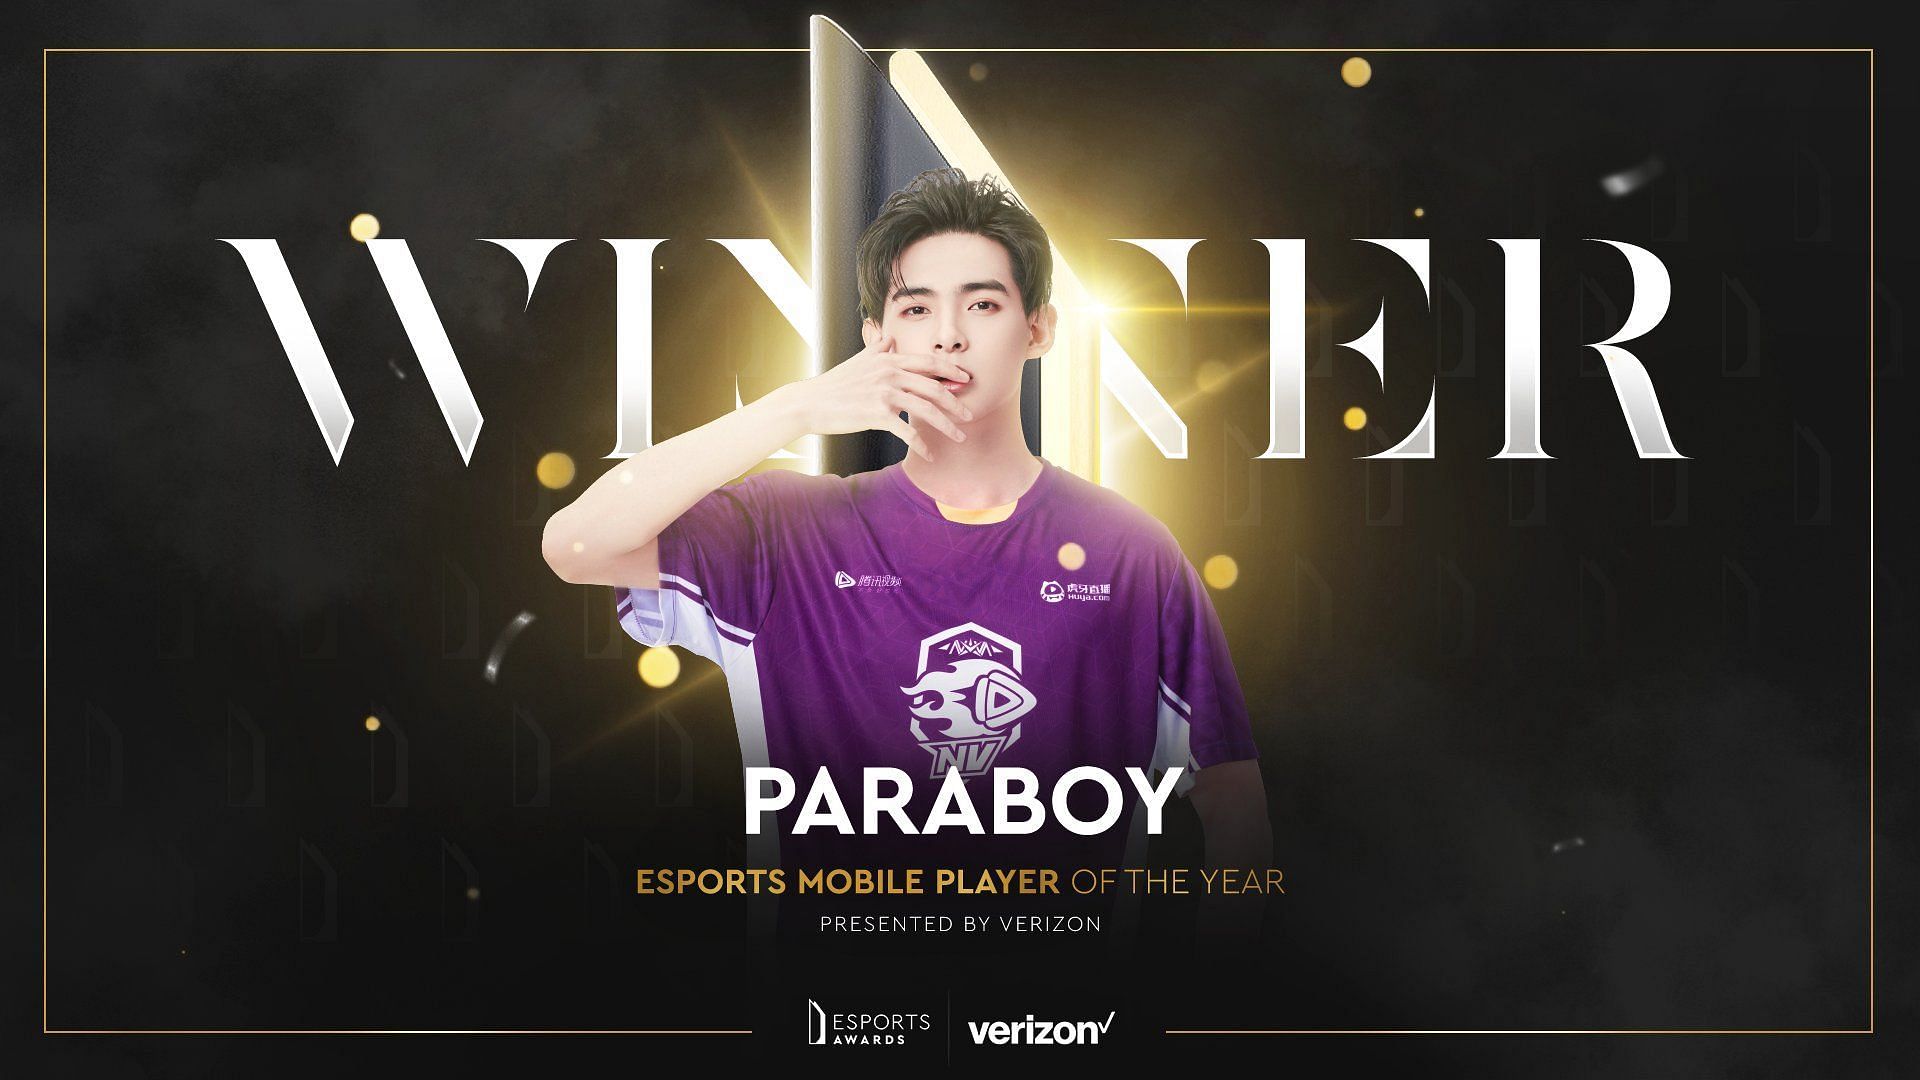 Paraboy won Esports Mobile Player of the Year (Image via Esports Awards)